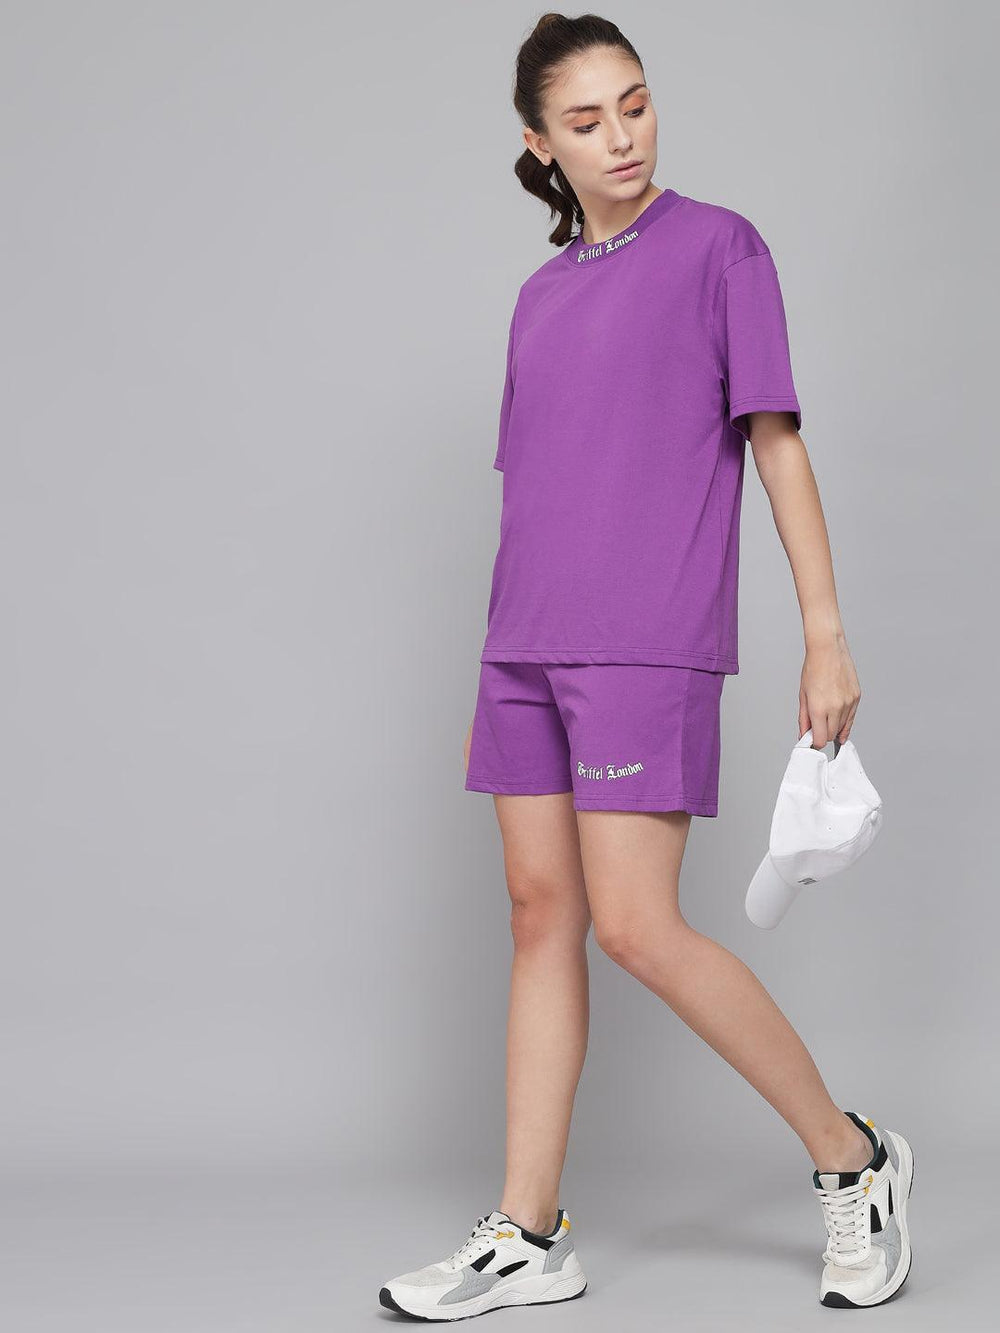 GRIFFEL Women Placement Print Regular fit Purple T-shirt - griffel